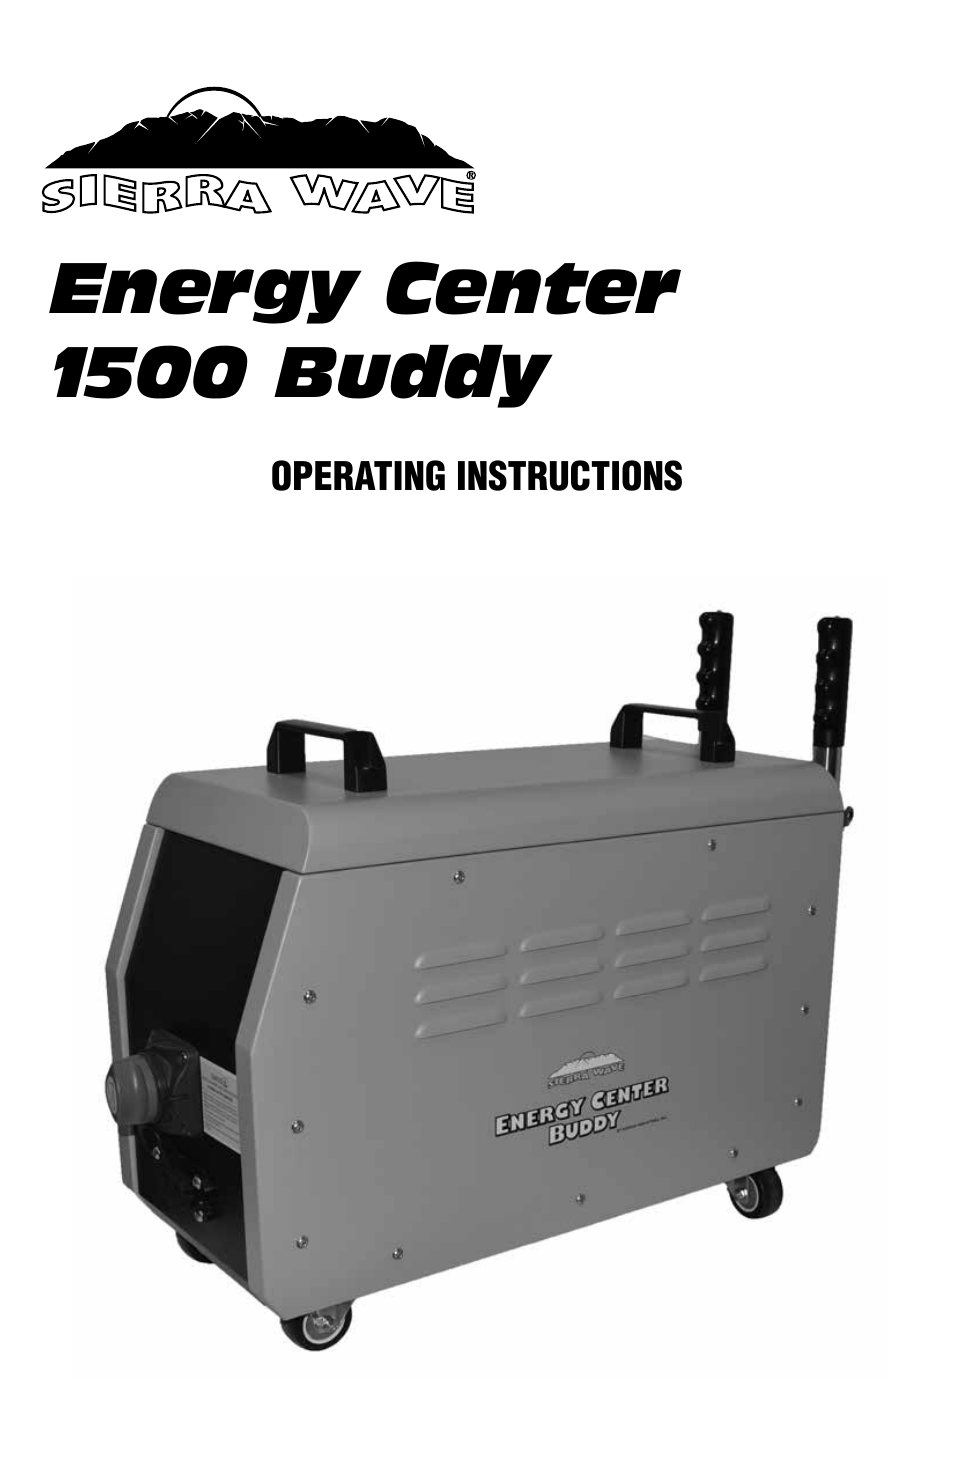 1500-Watt Energy Center Buddy